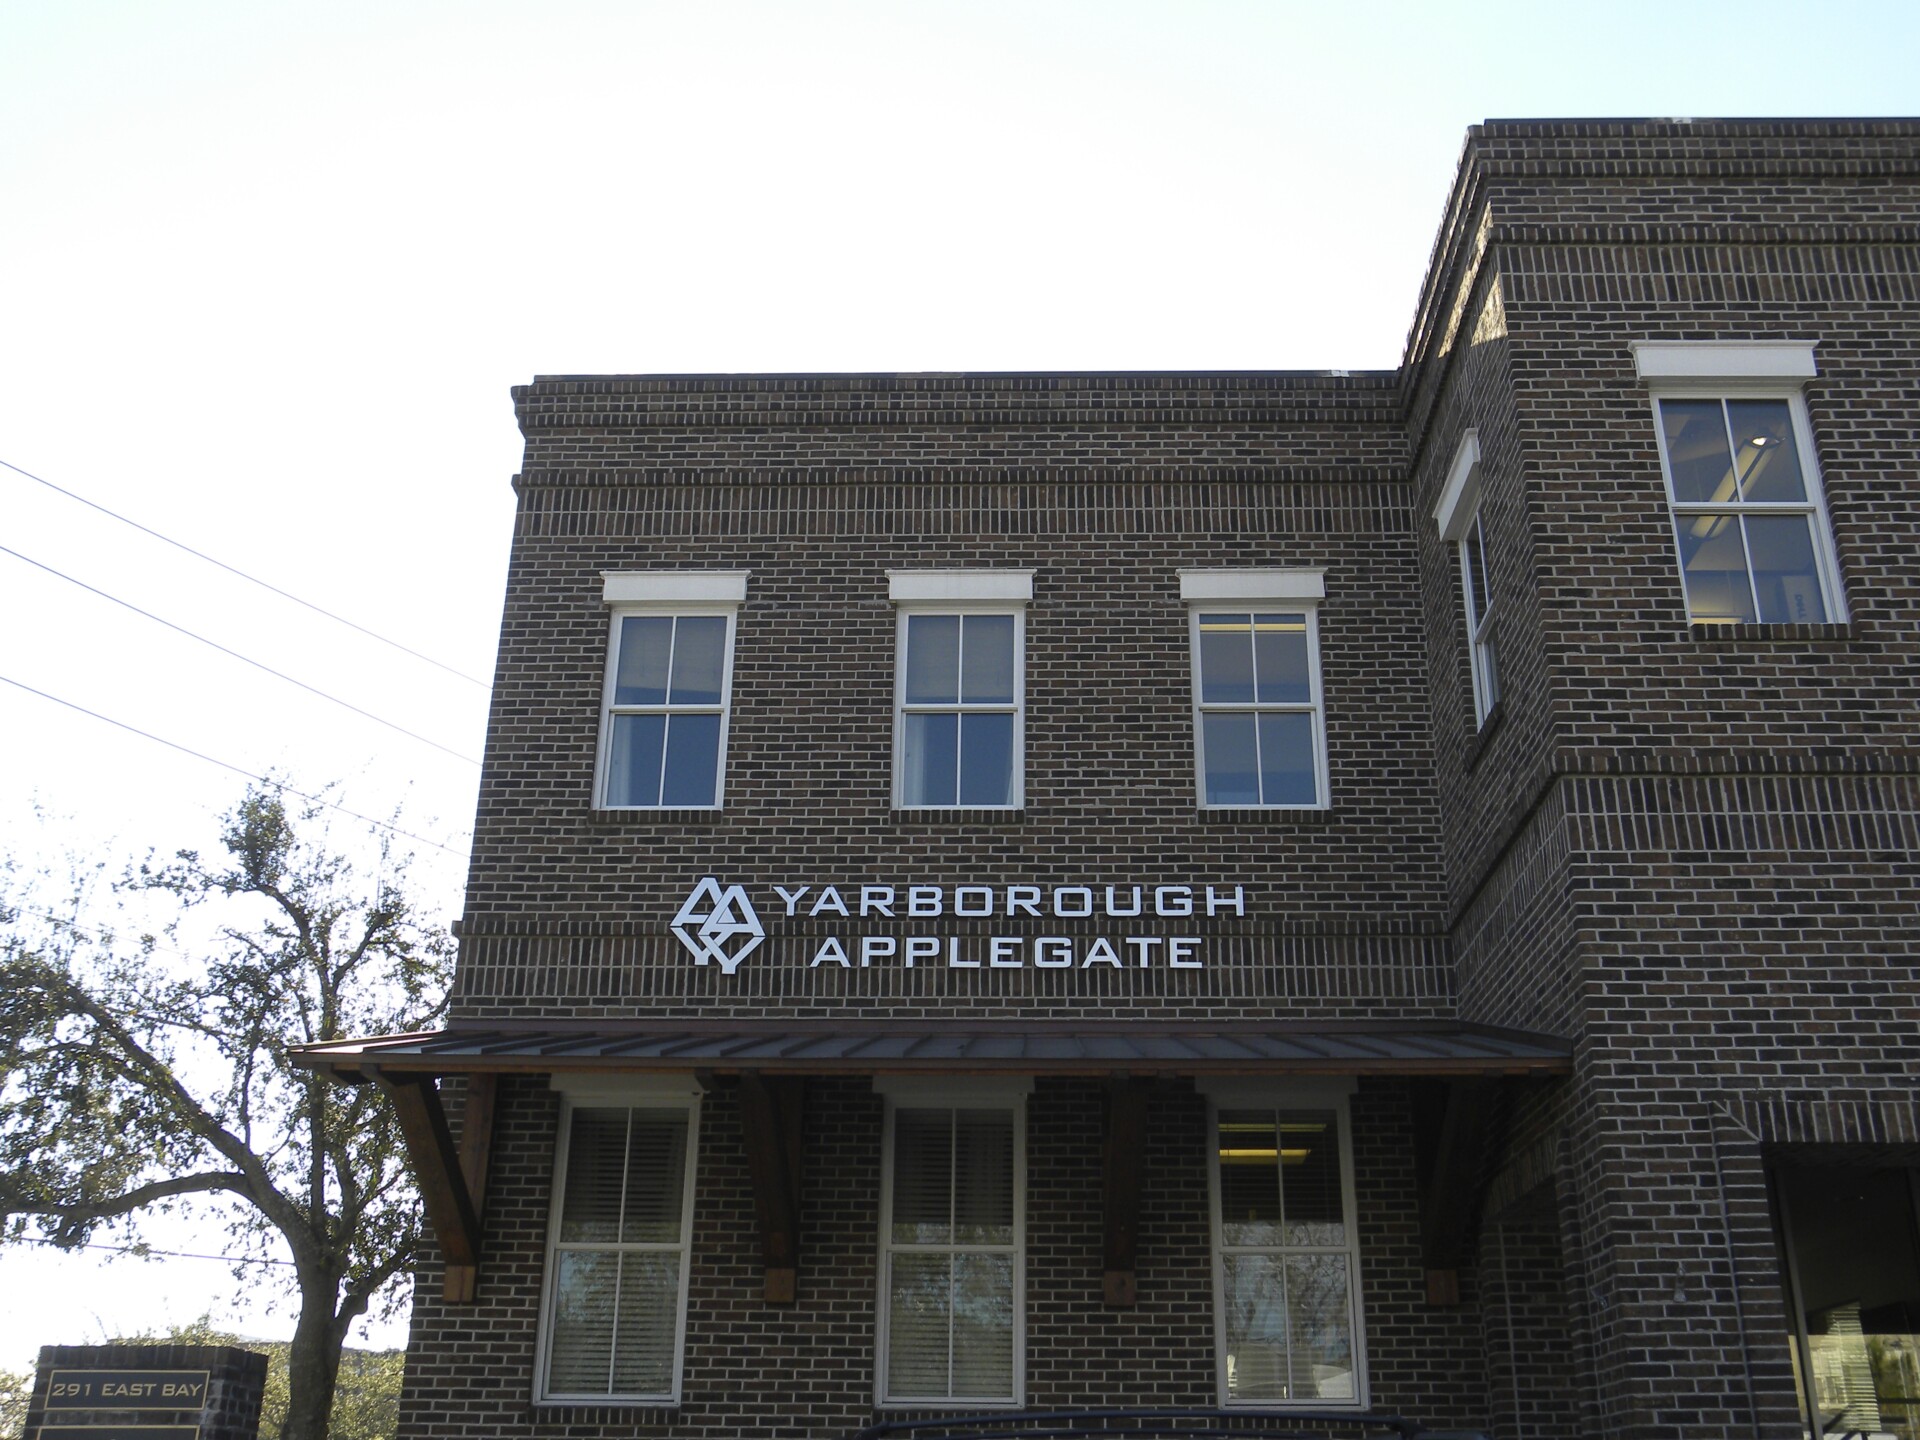 Yarborough + Applegate